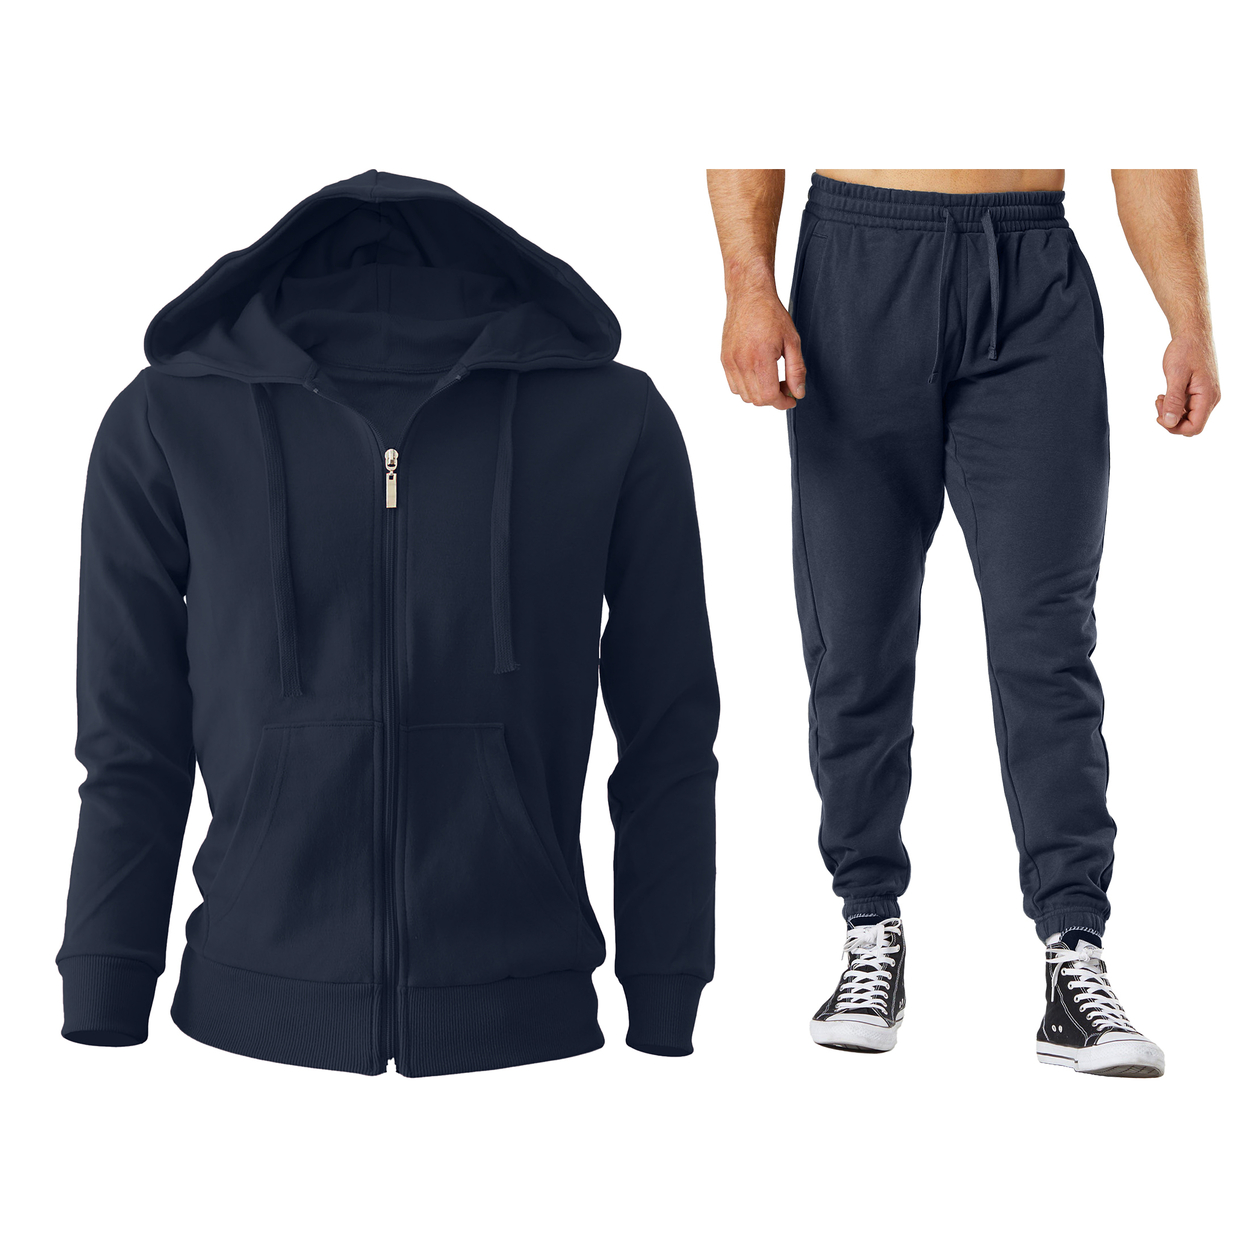 2-Piece: Men's Winter Warm Cozy Athletic Multi-Pockets BIG & TALL Sweatsuit Set - Black, 3xl